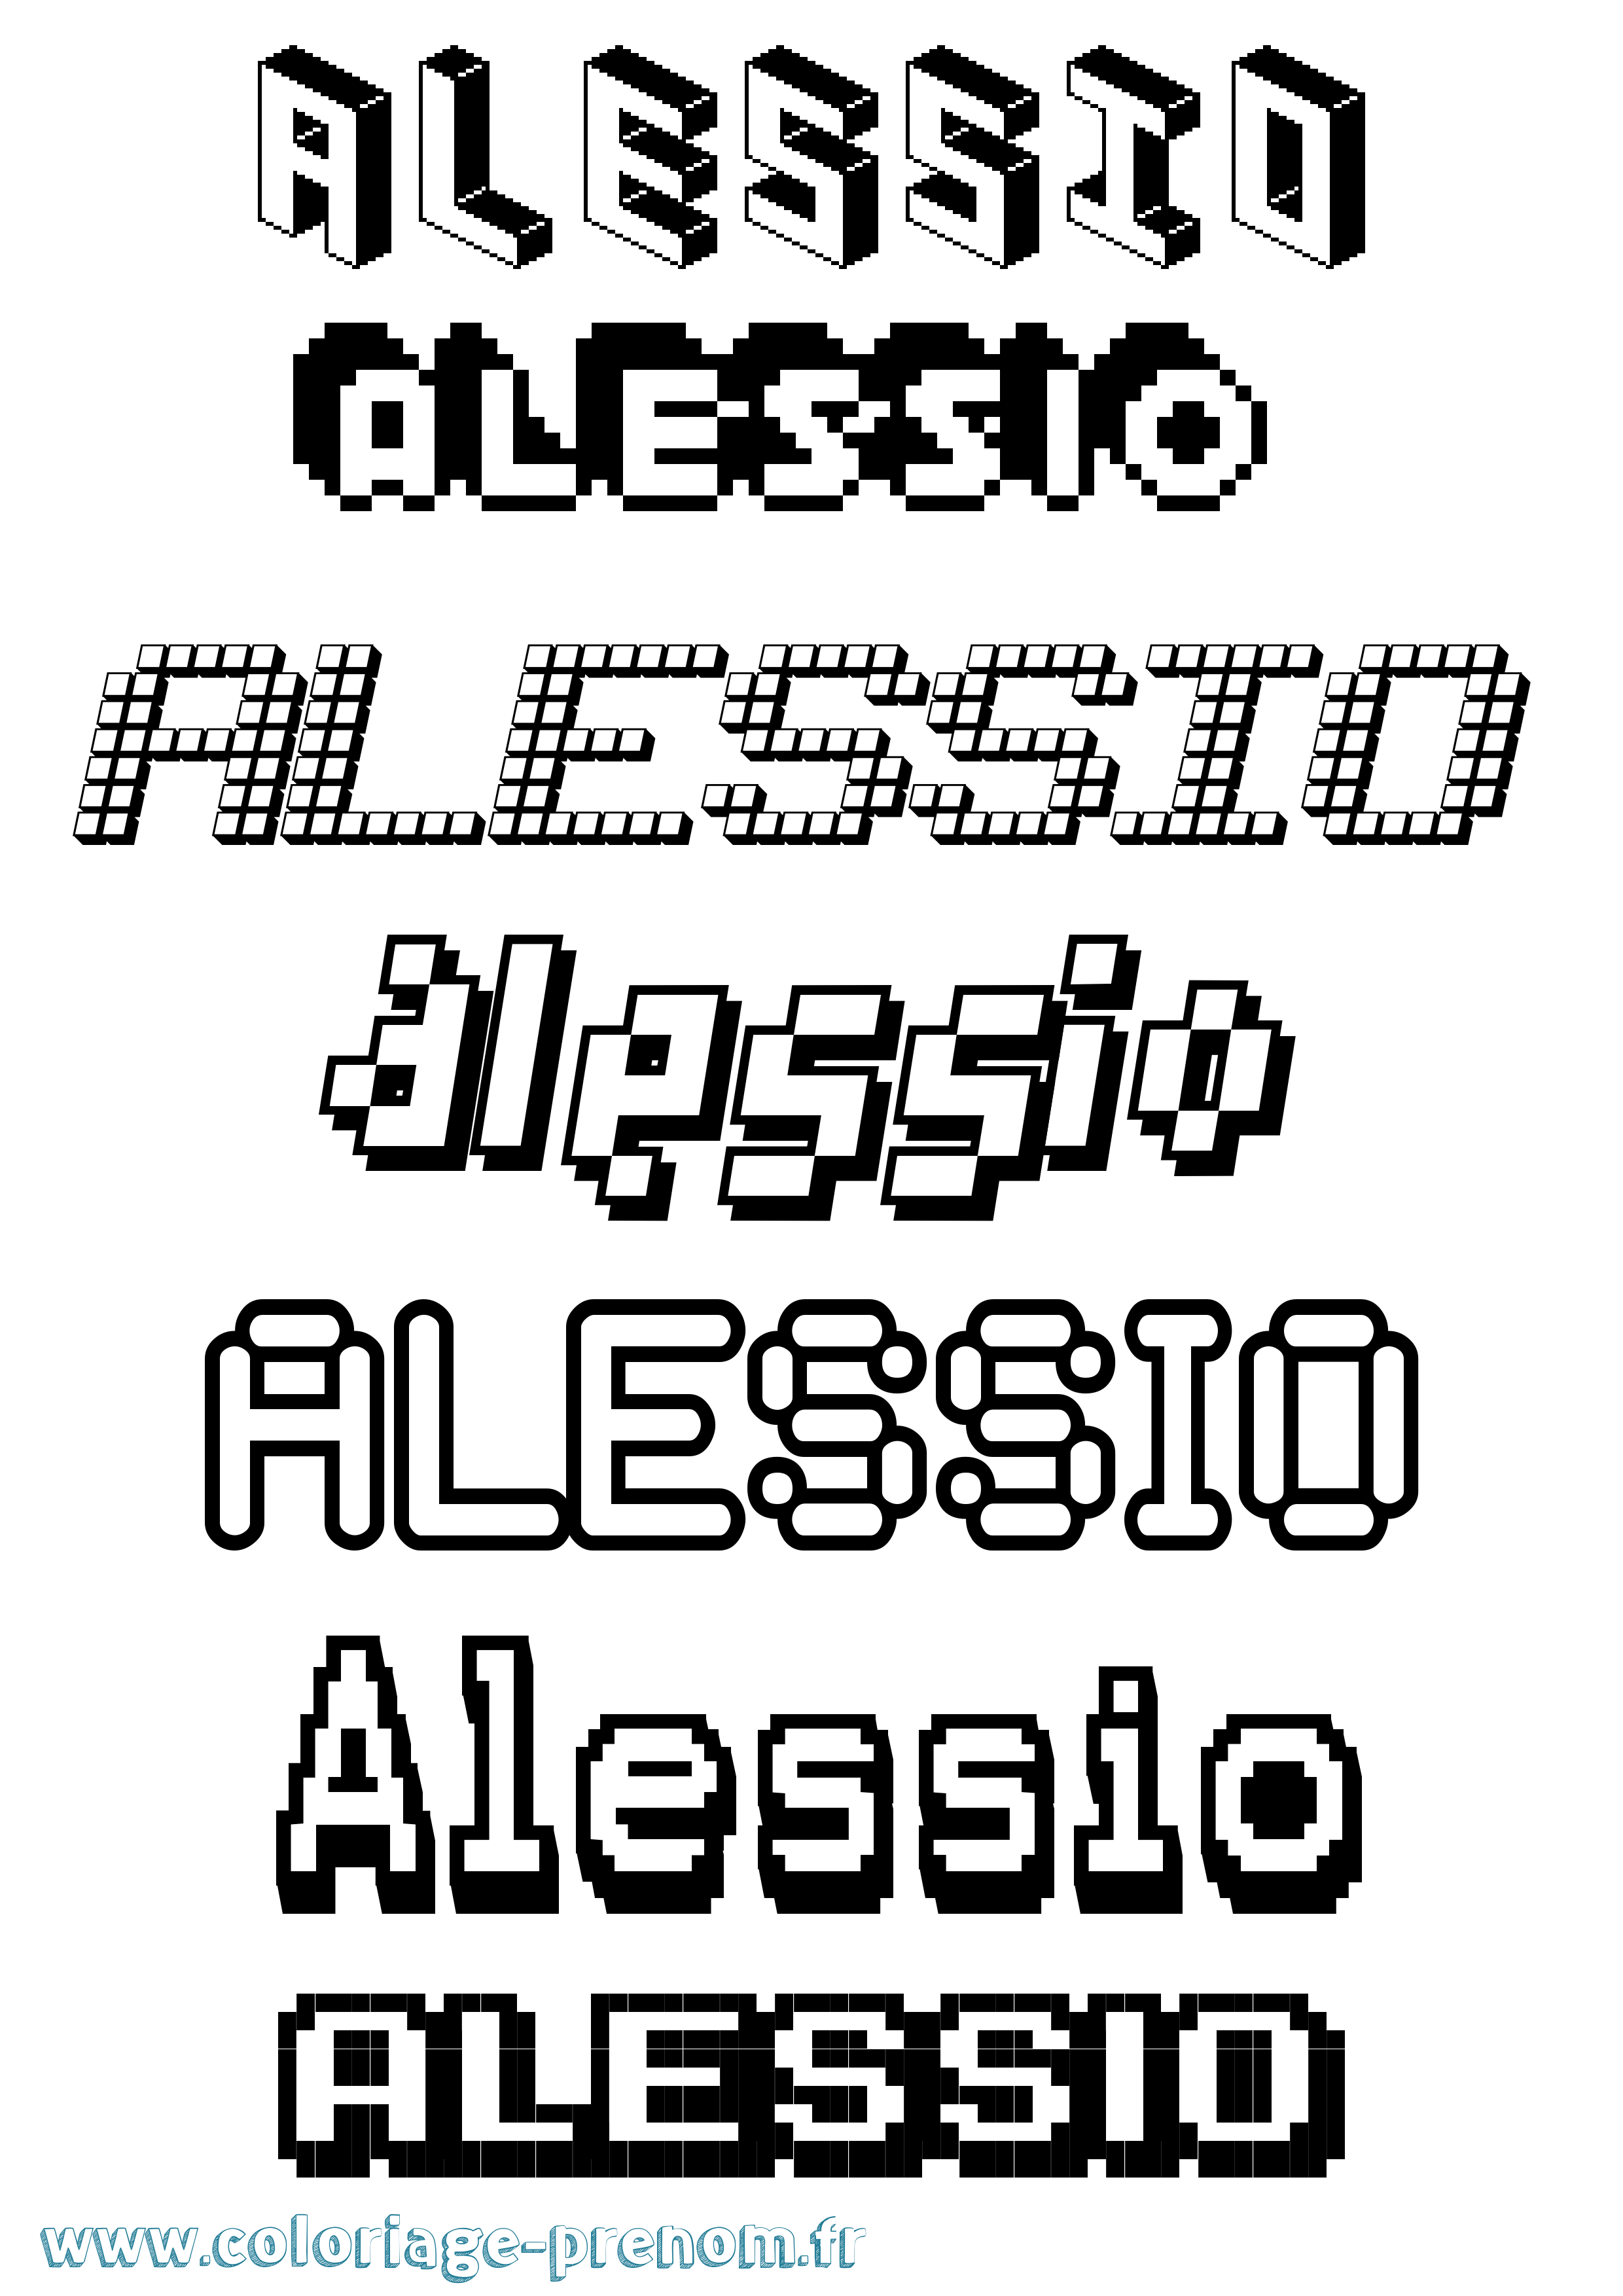 Coloriage prénom Alessio Pixel